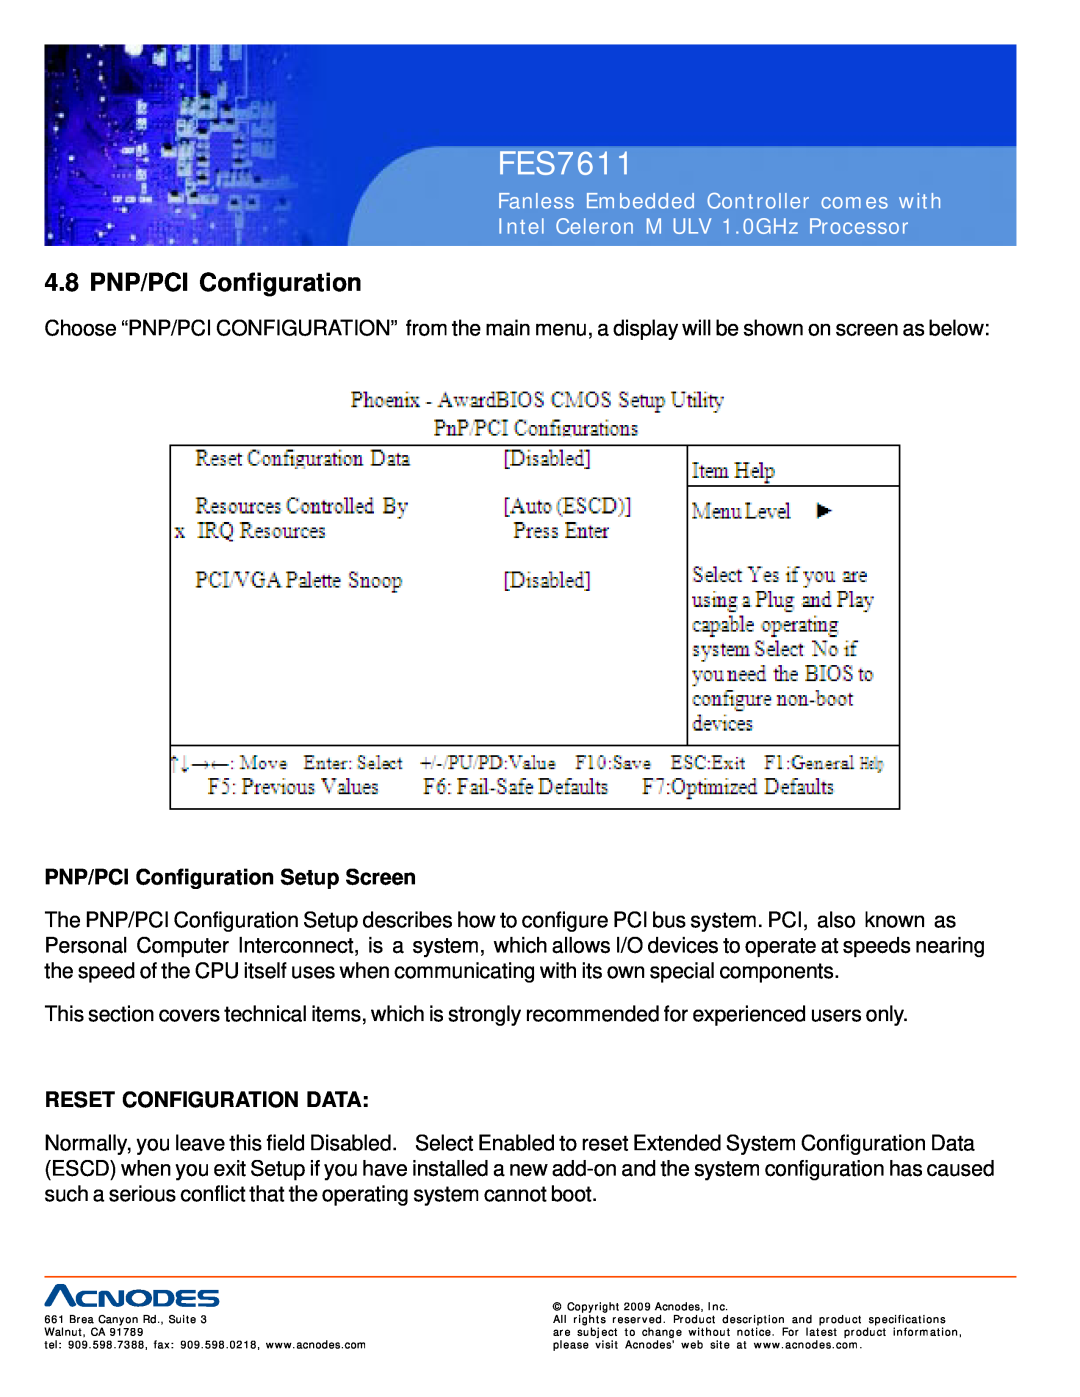 Acnodes FES7611 user manual 4.8 PNP/PCI Configuration, PNP/PCI Configuration Setup Screen, Reset Configuration Data 